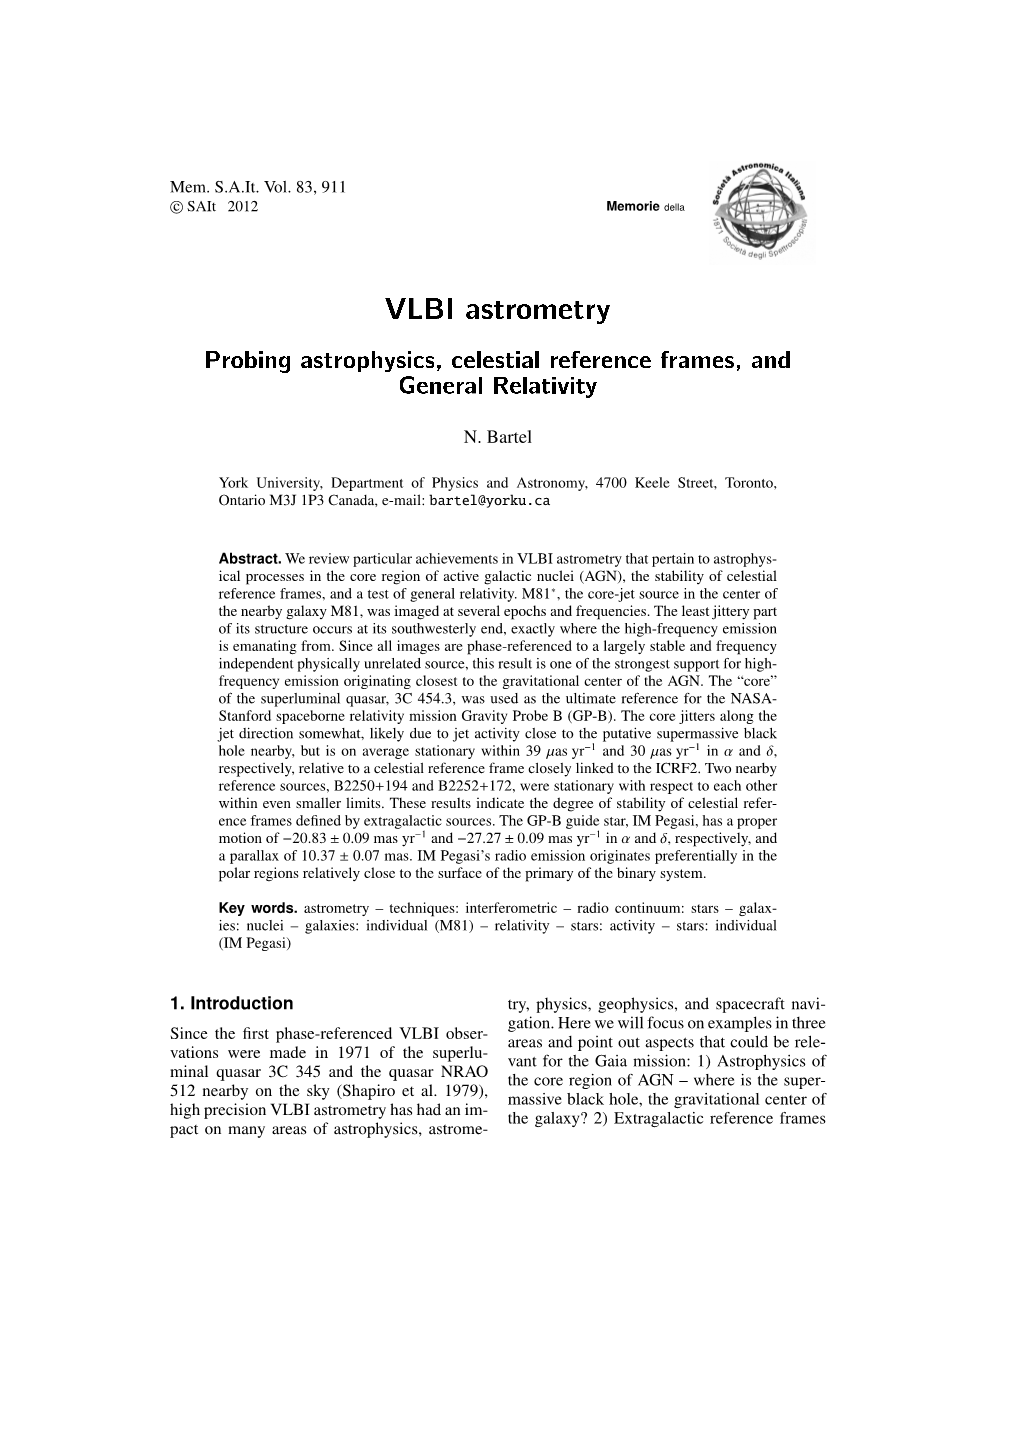 VLBI Astrometry